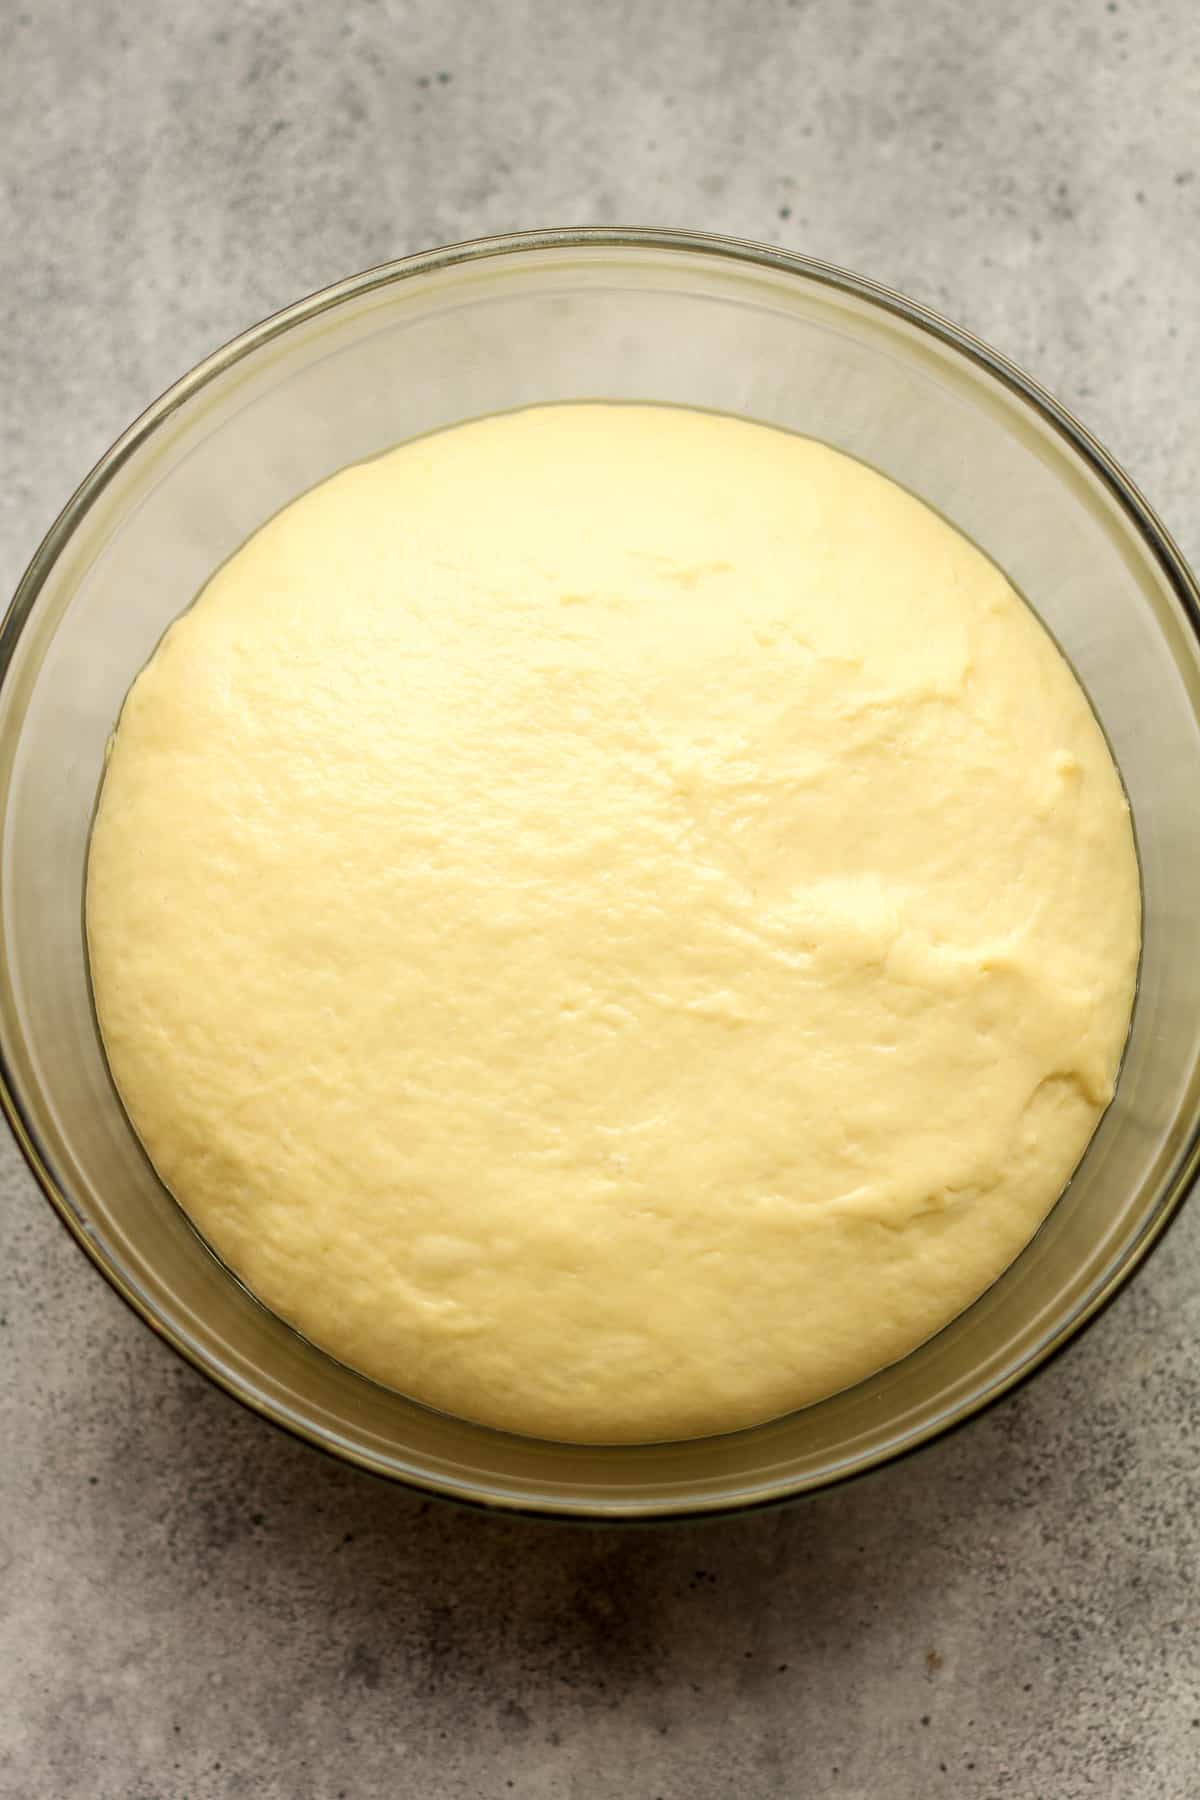 A bowl of the bread dough.